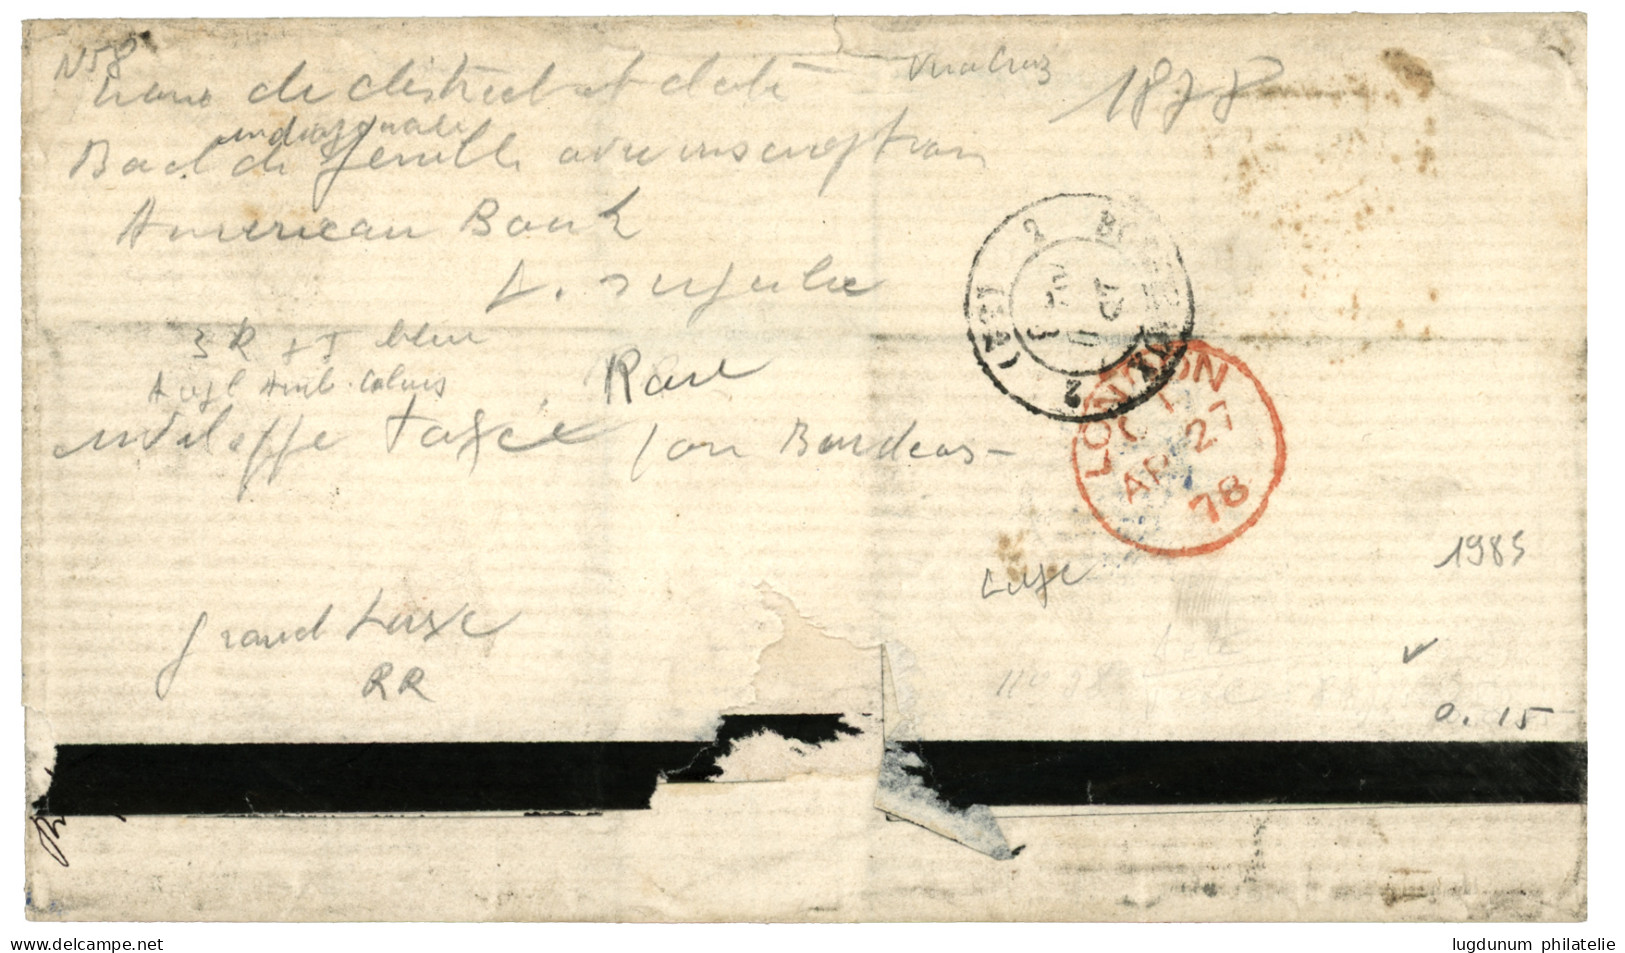 MEXICO : 1878 25c Canc. FRANCO VERA-CRUZ + T + 34 Tax Marking (rare) On Entire To FRANCE. Vf. - Mexico